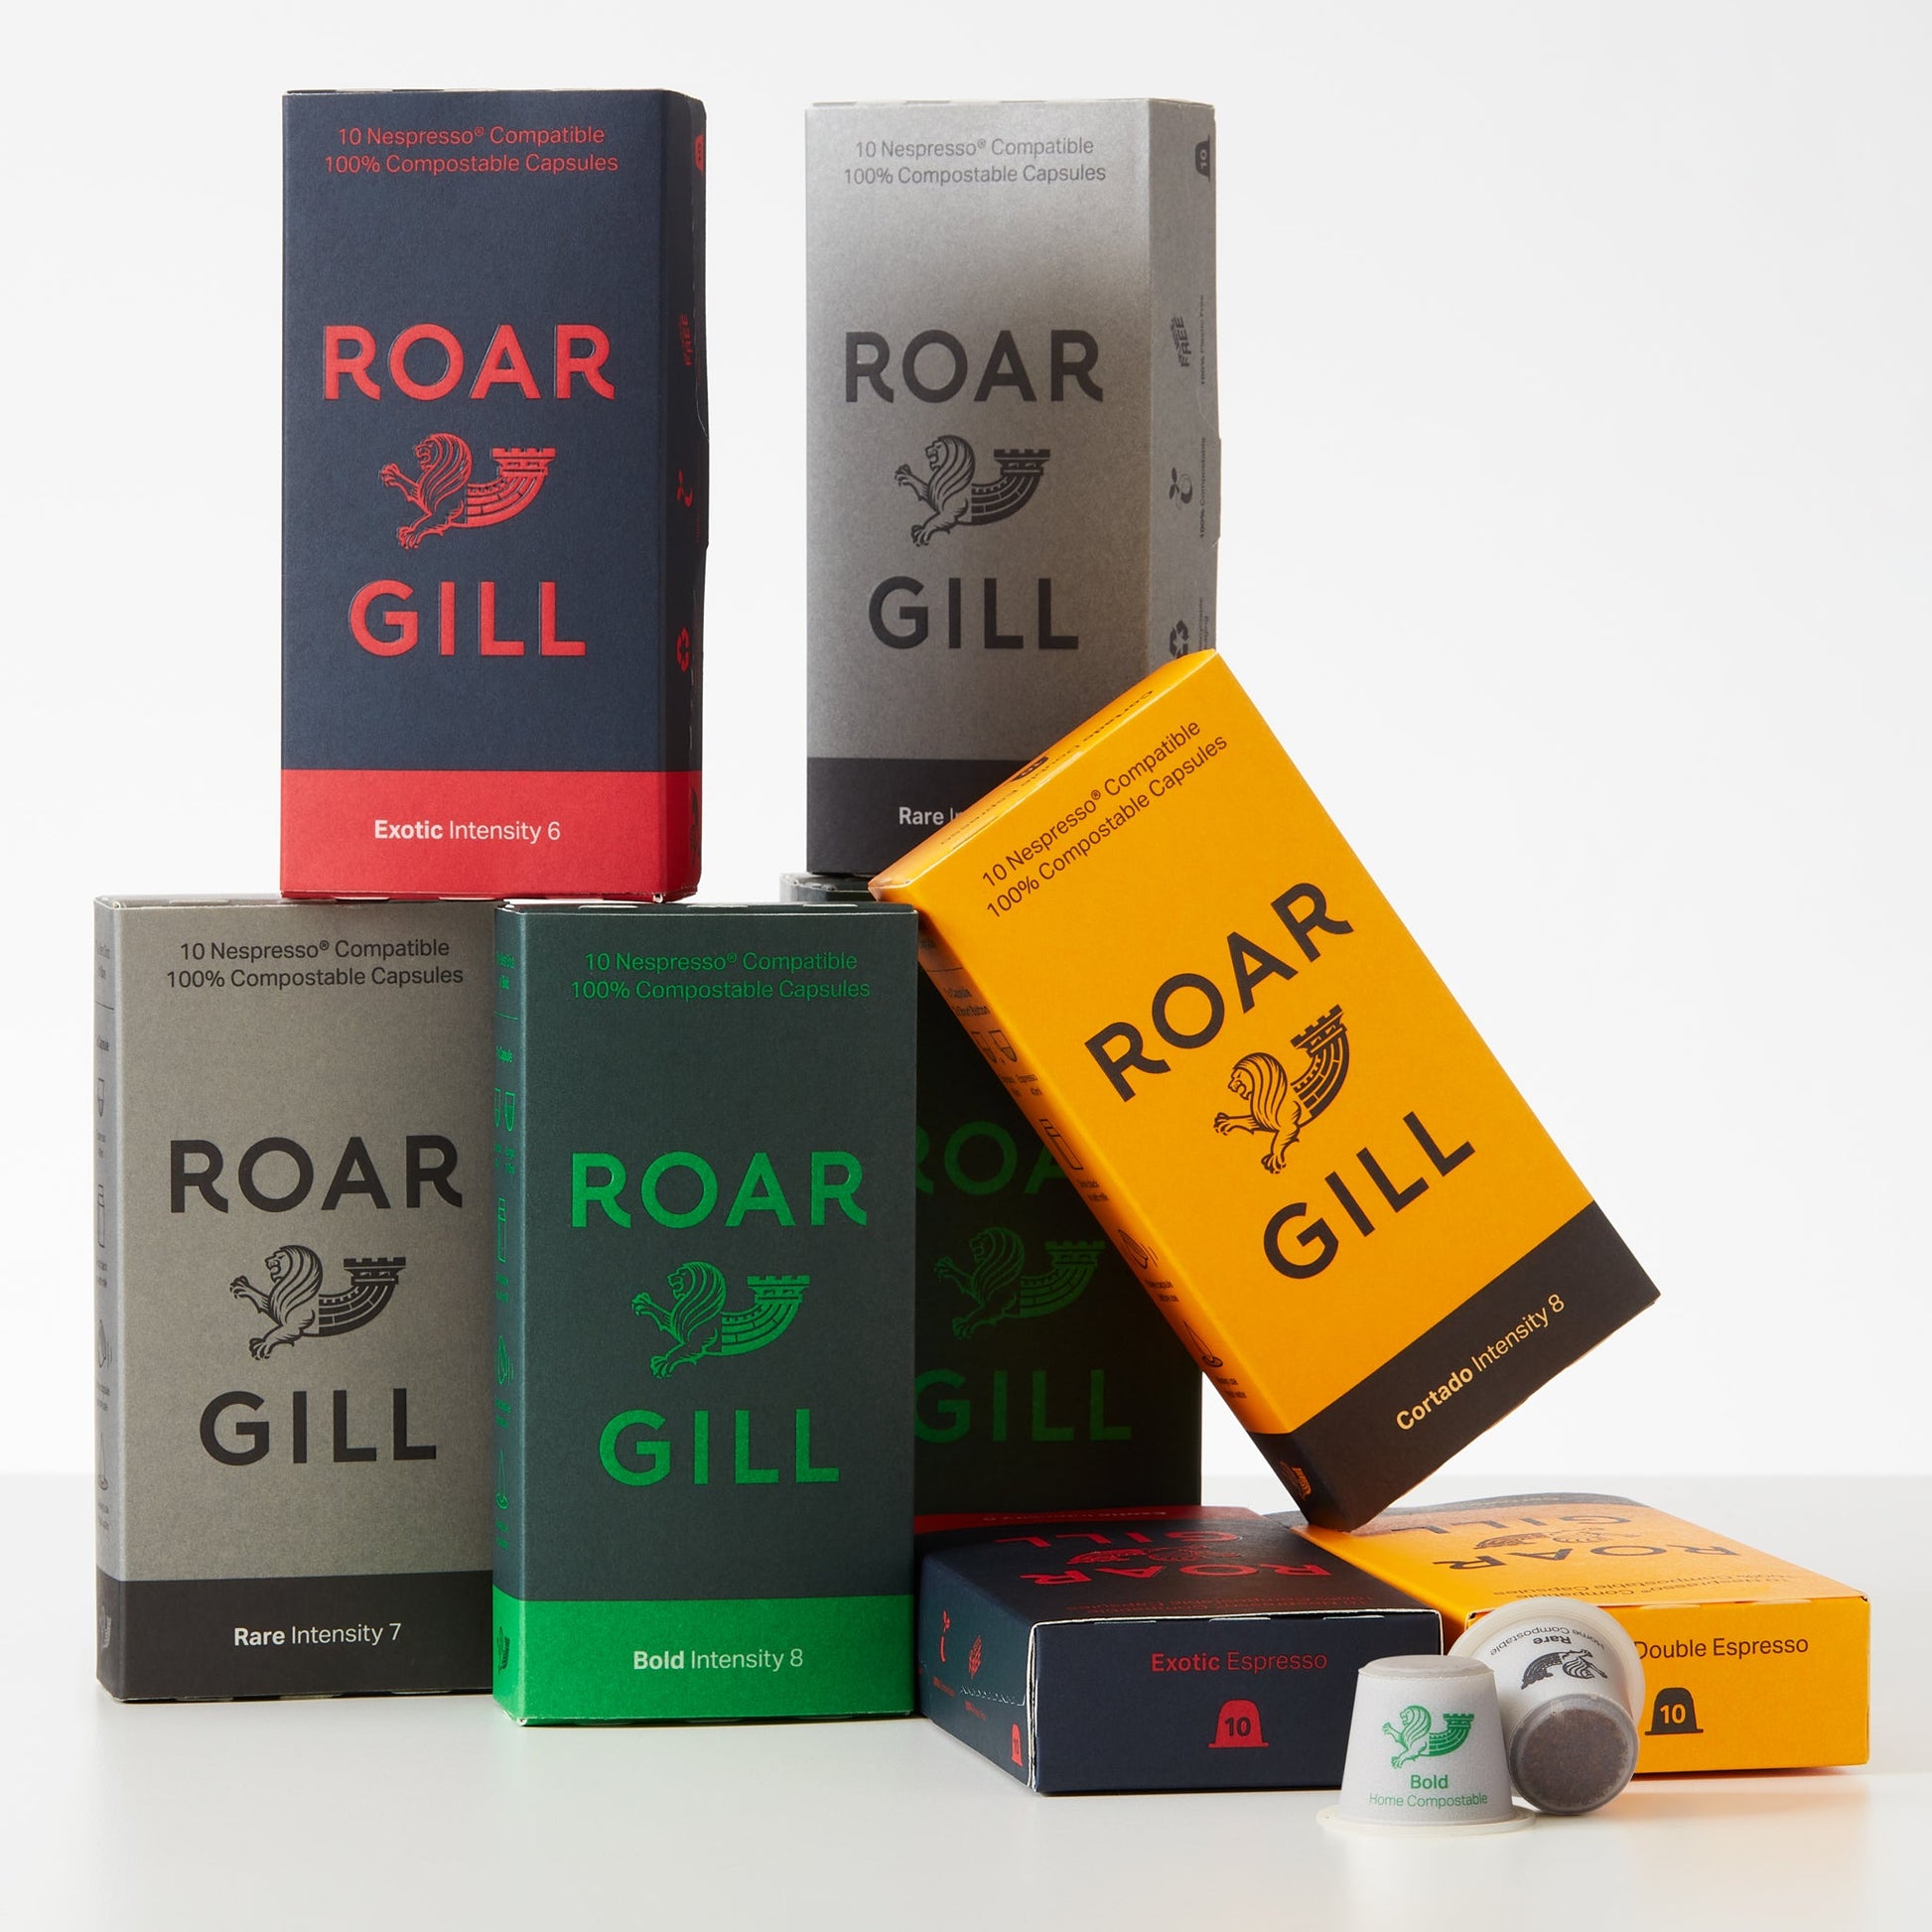 Roar Gill Exotic, Rare, Bold & Cortado Coffee Pod boxes.